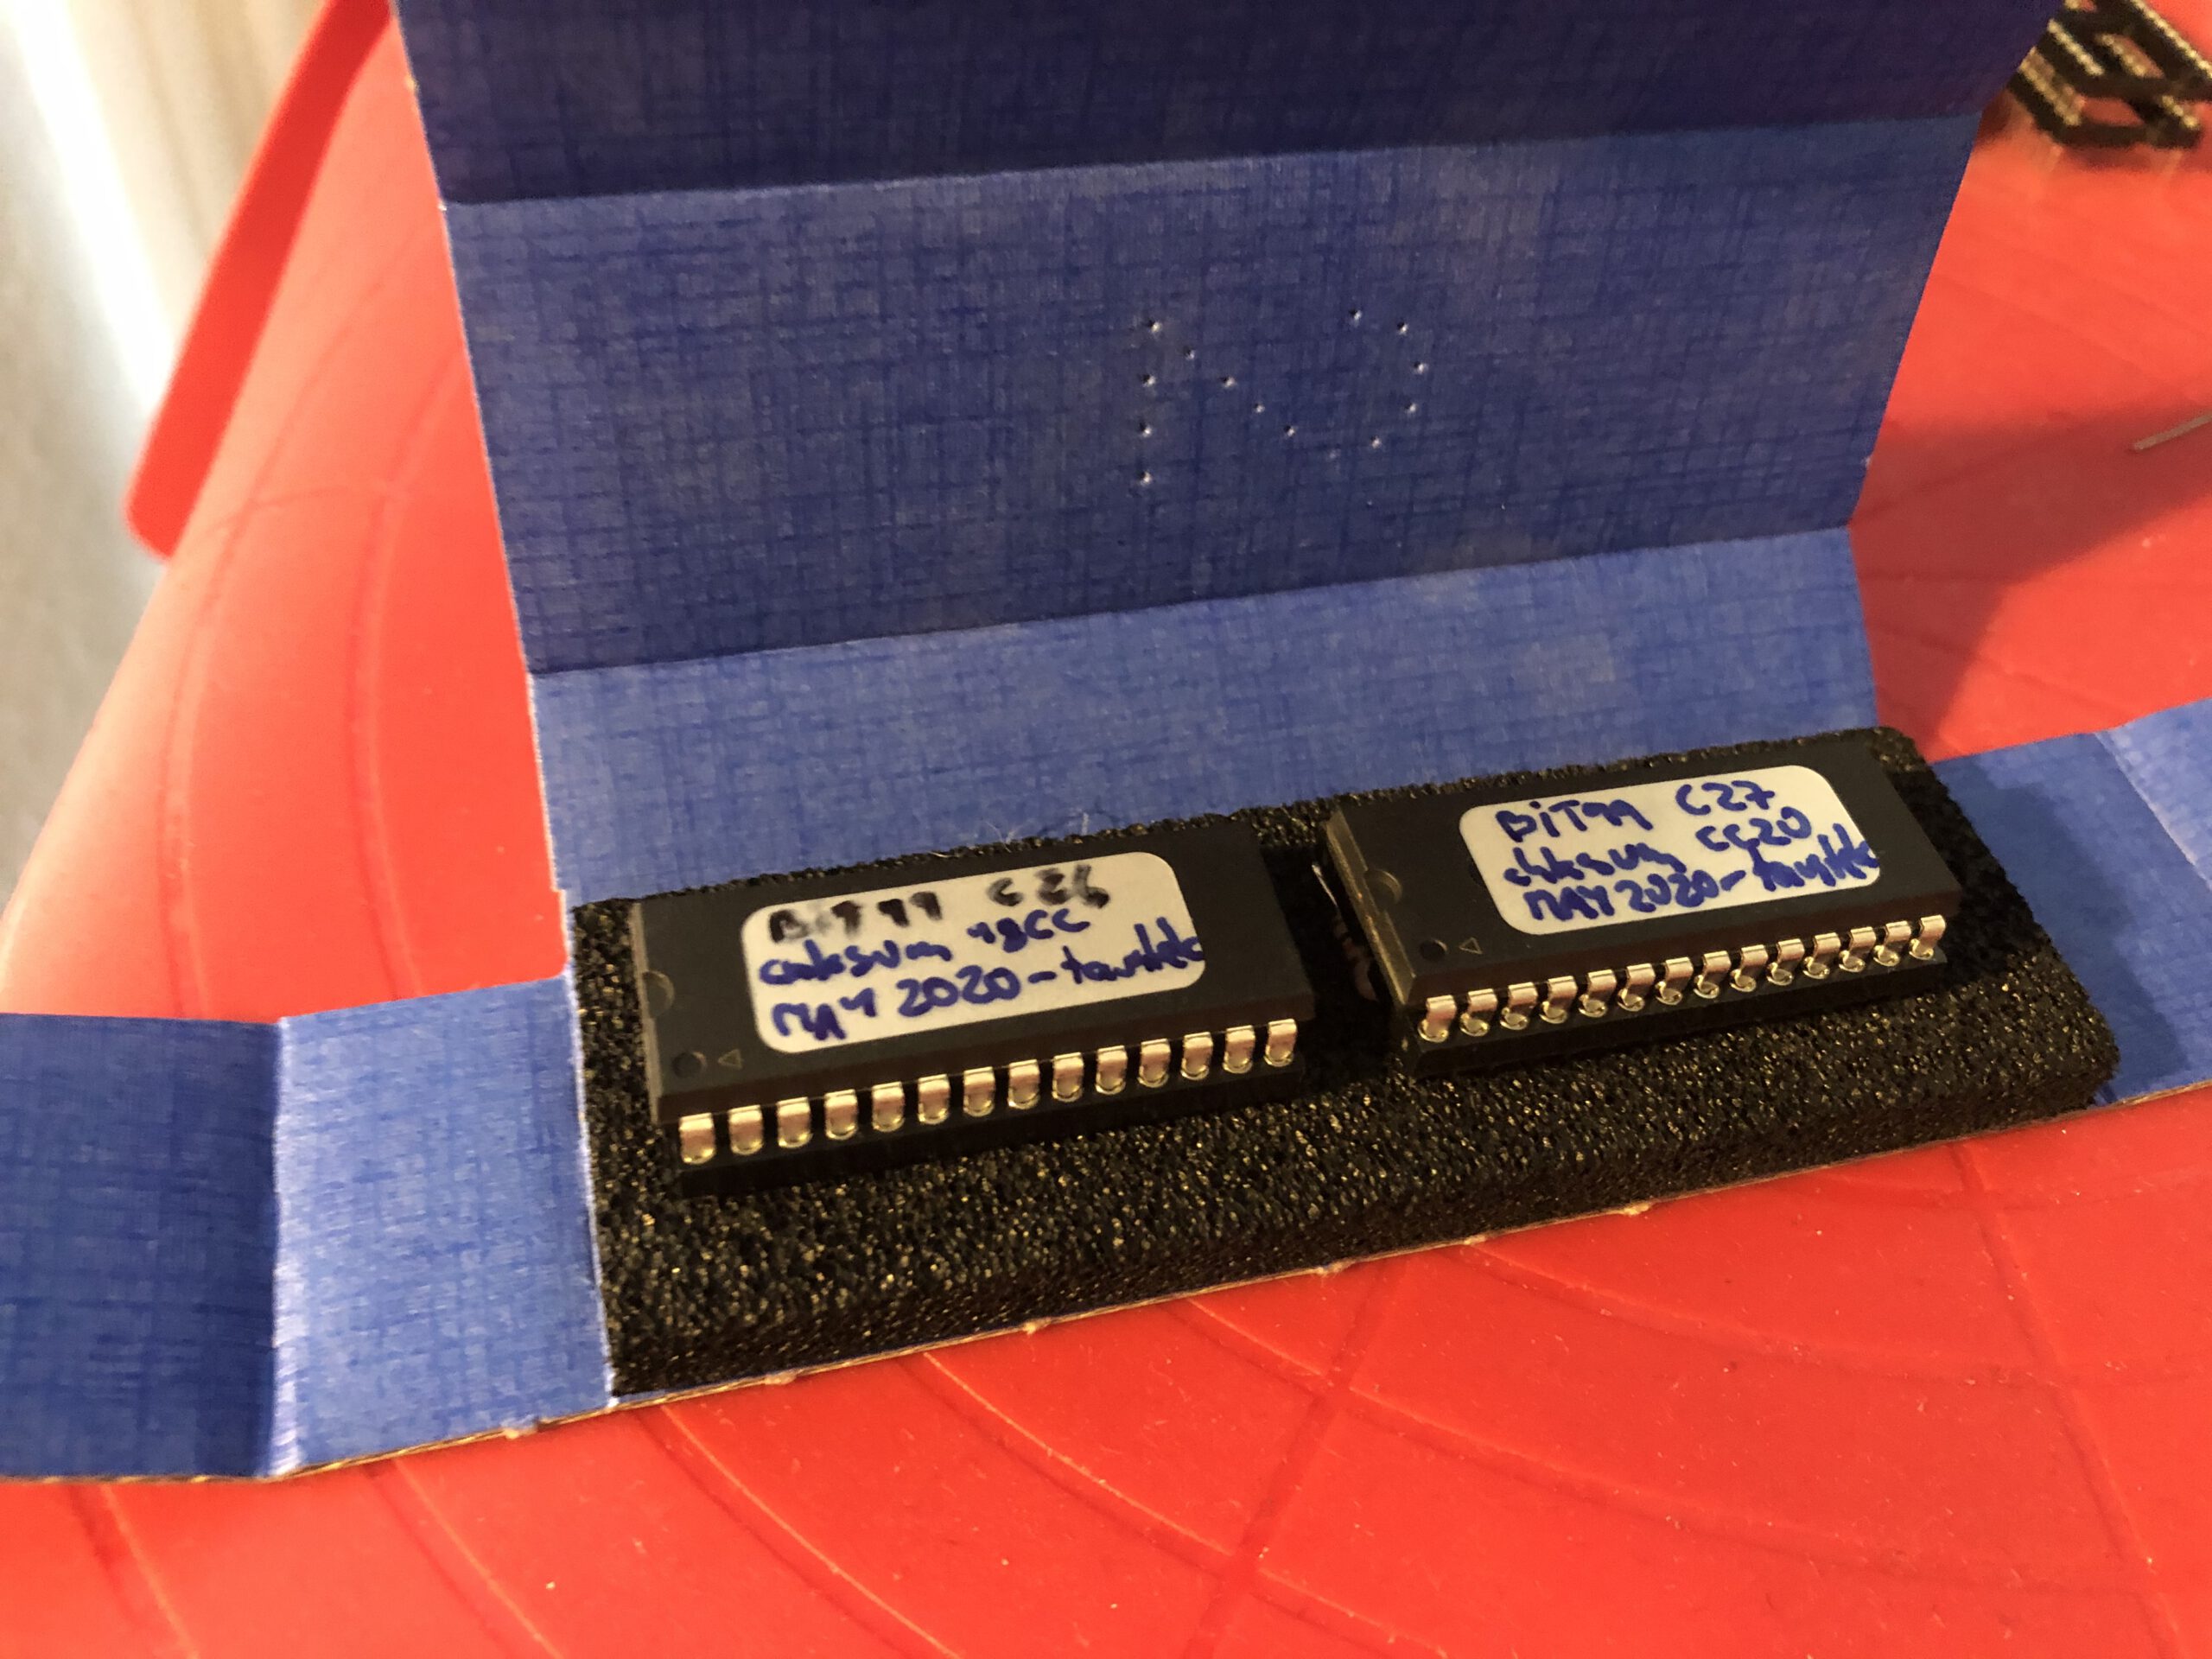 Crumar Bit-99 chipset may 2020